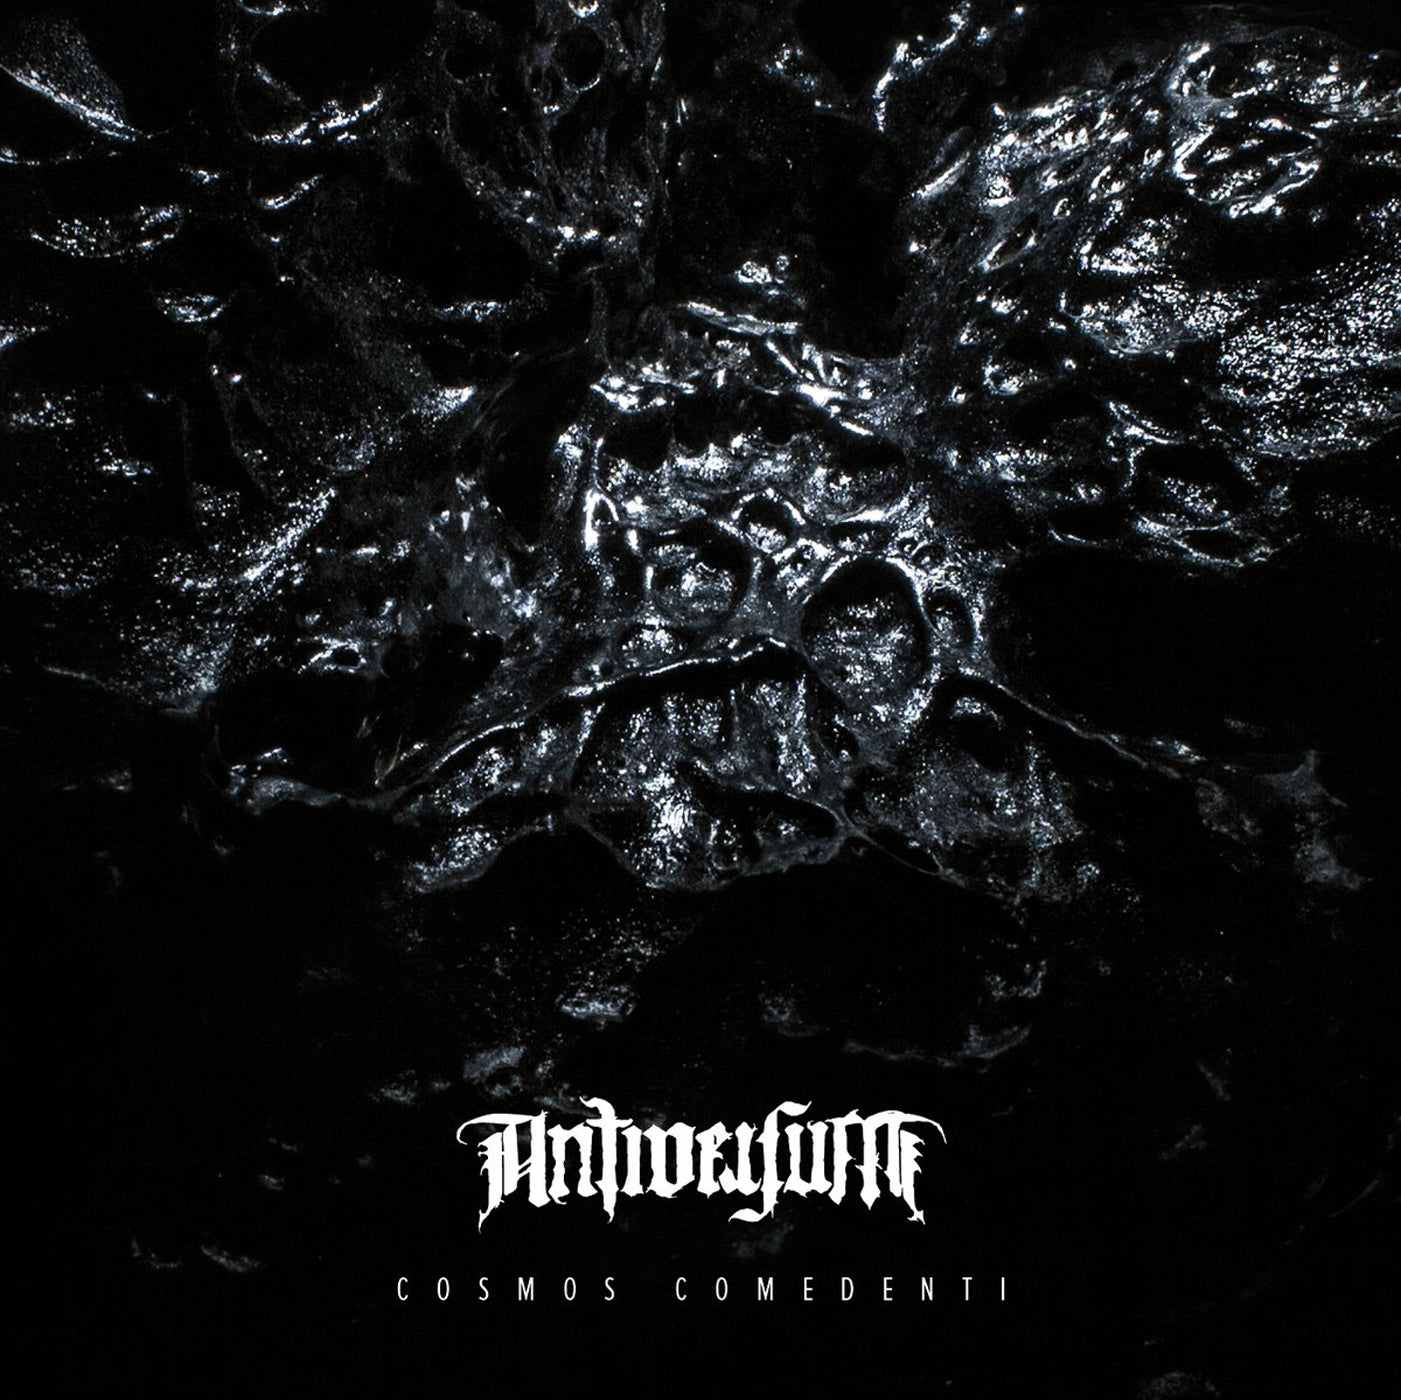 Antiversum - Cosmos Comedenti LP (white/black spiral vinyl)